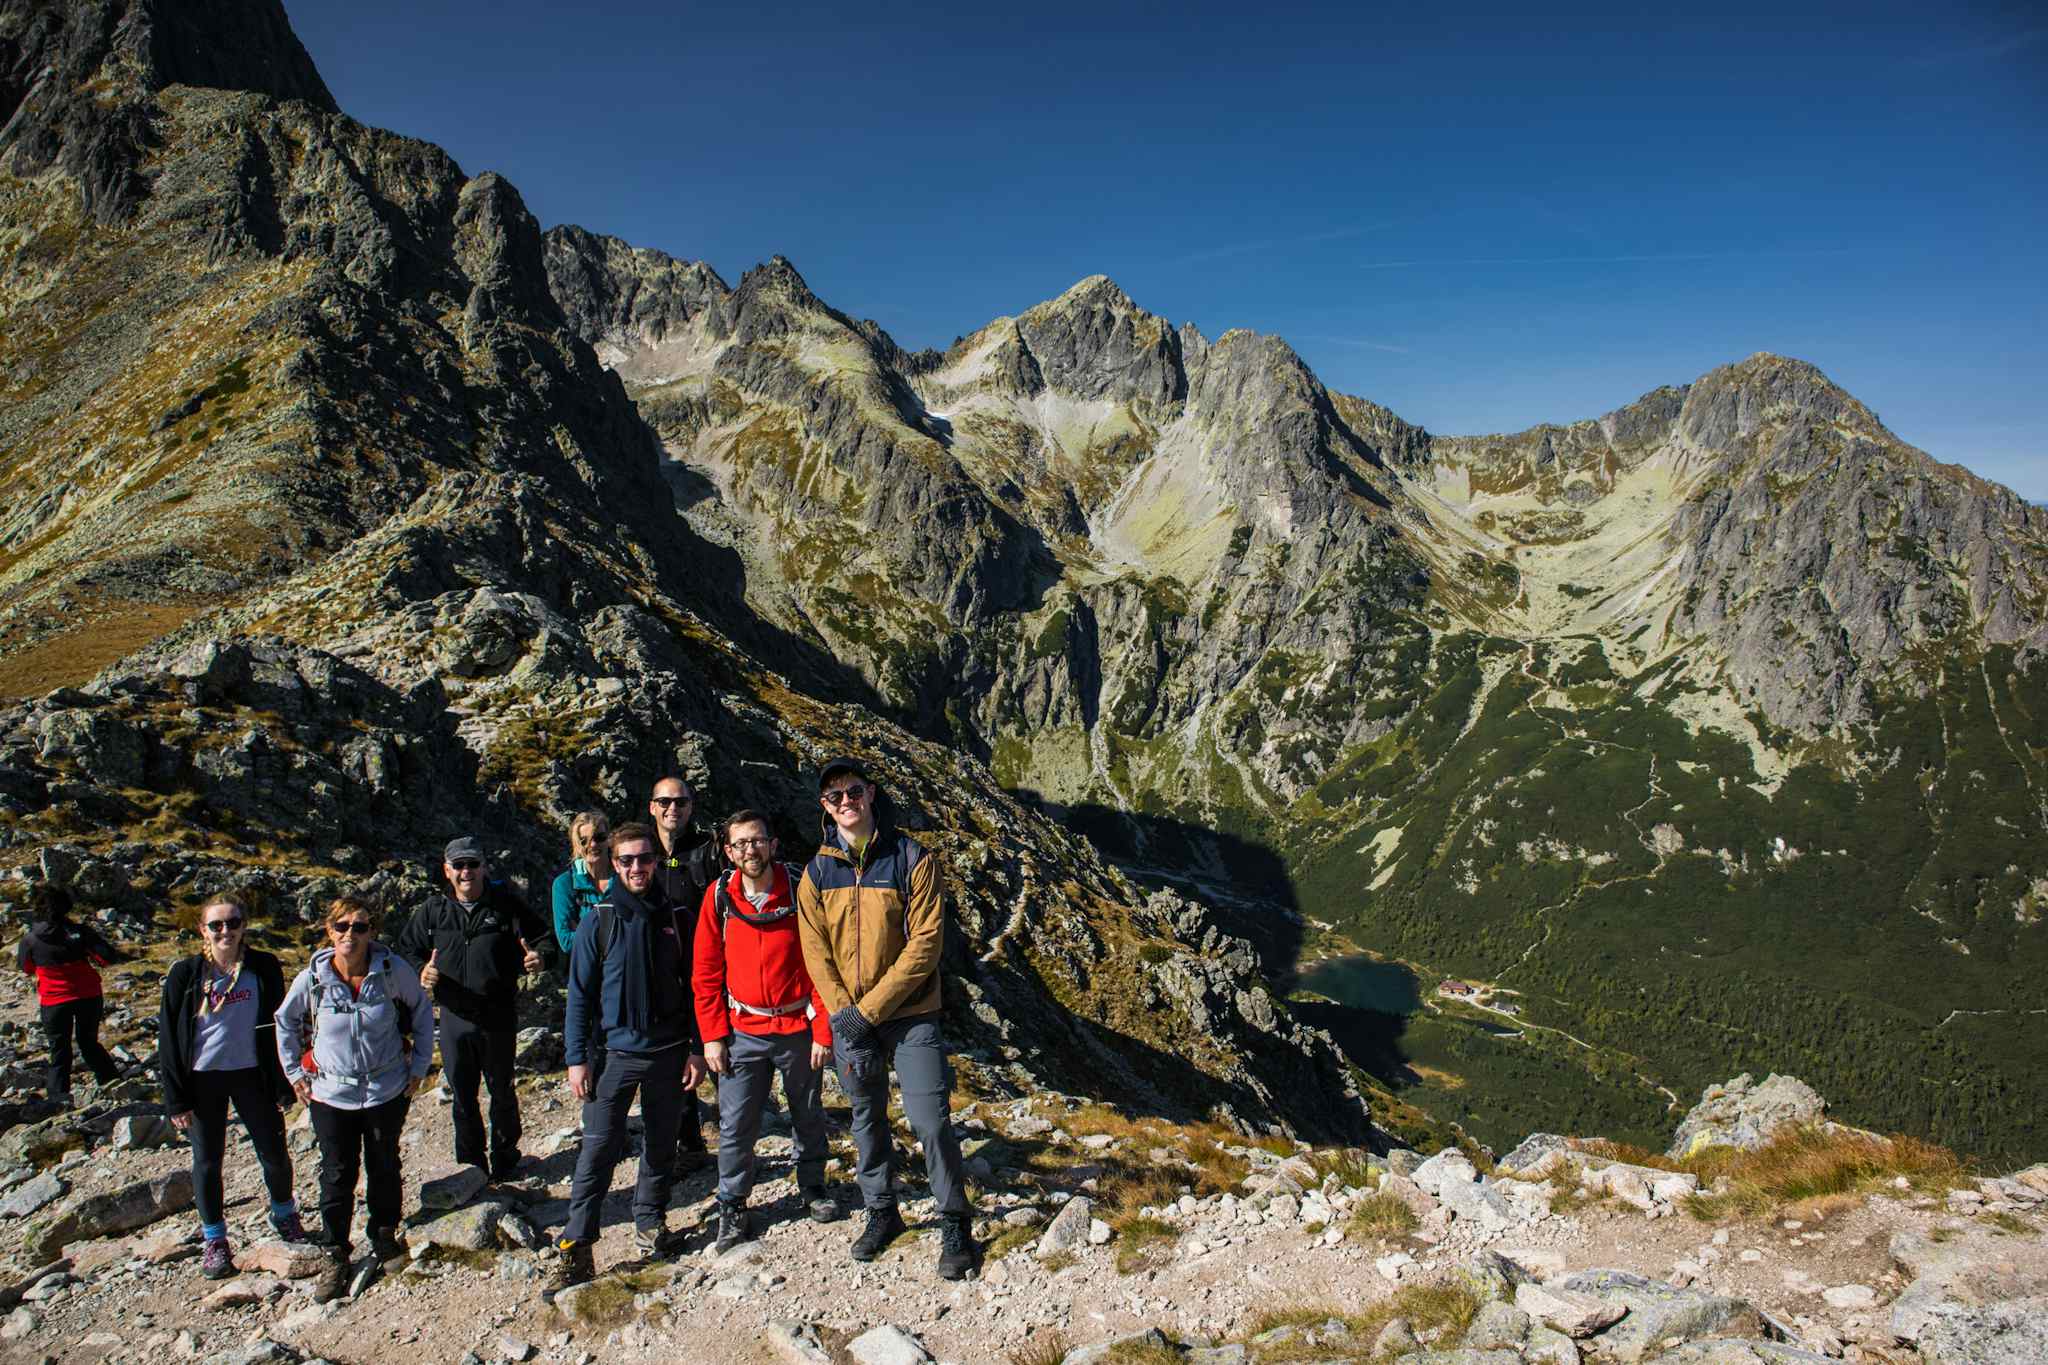 Tatras Mountains, Slovakia
Host image - Slovakation